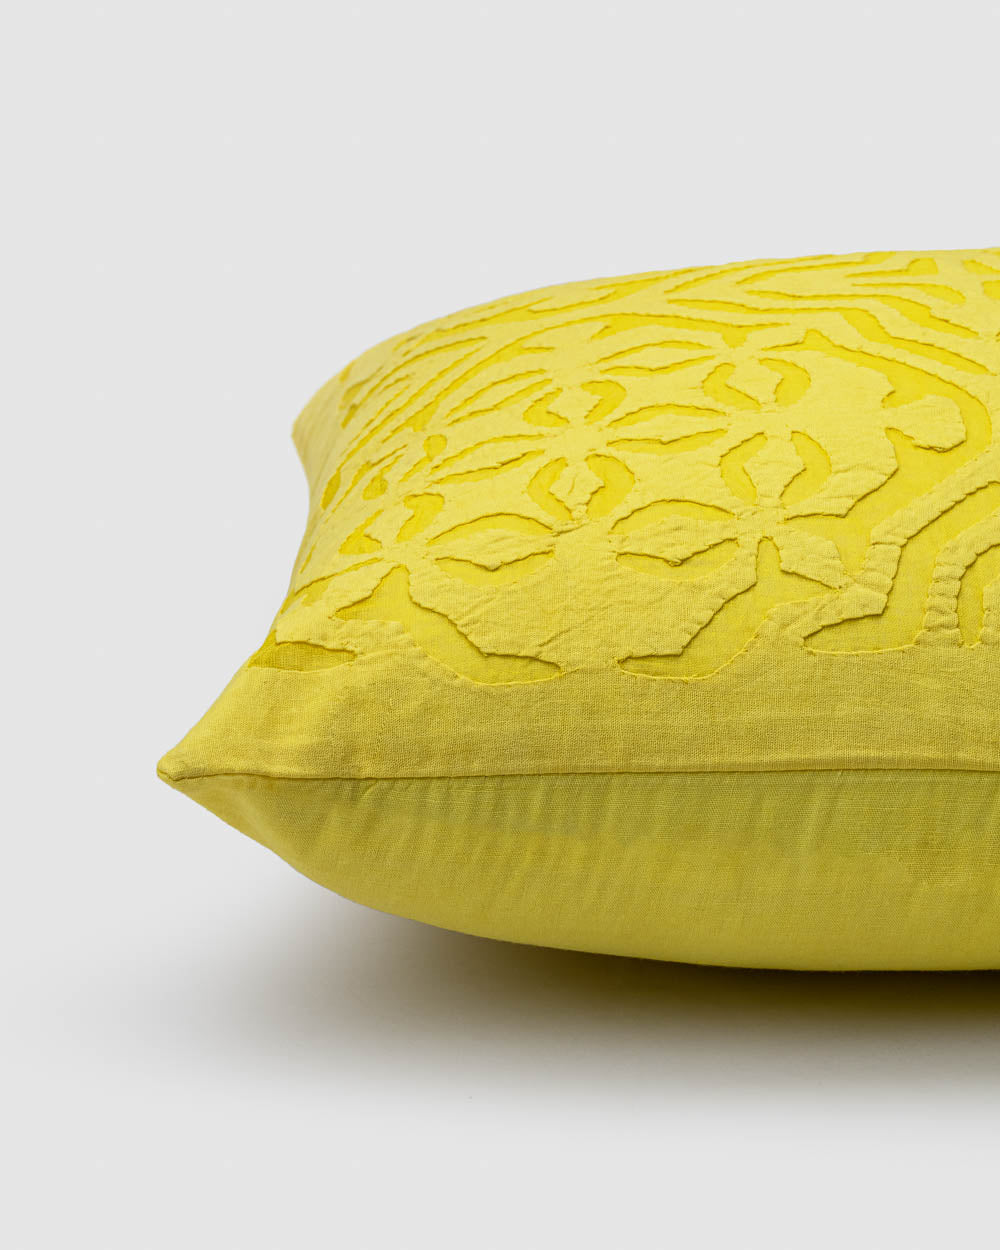 Cushion Cover Applique Kidd Design, Yellow